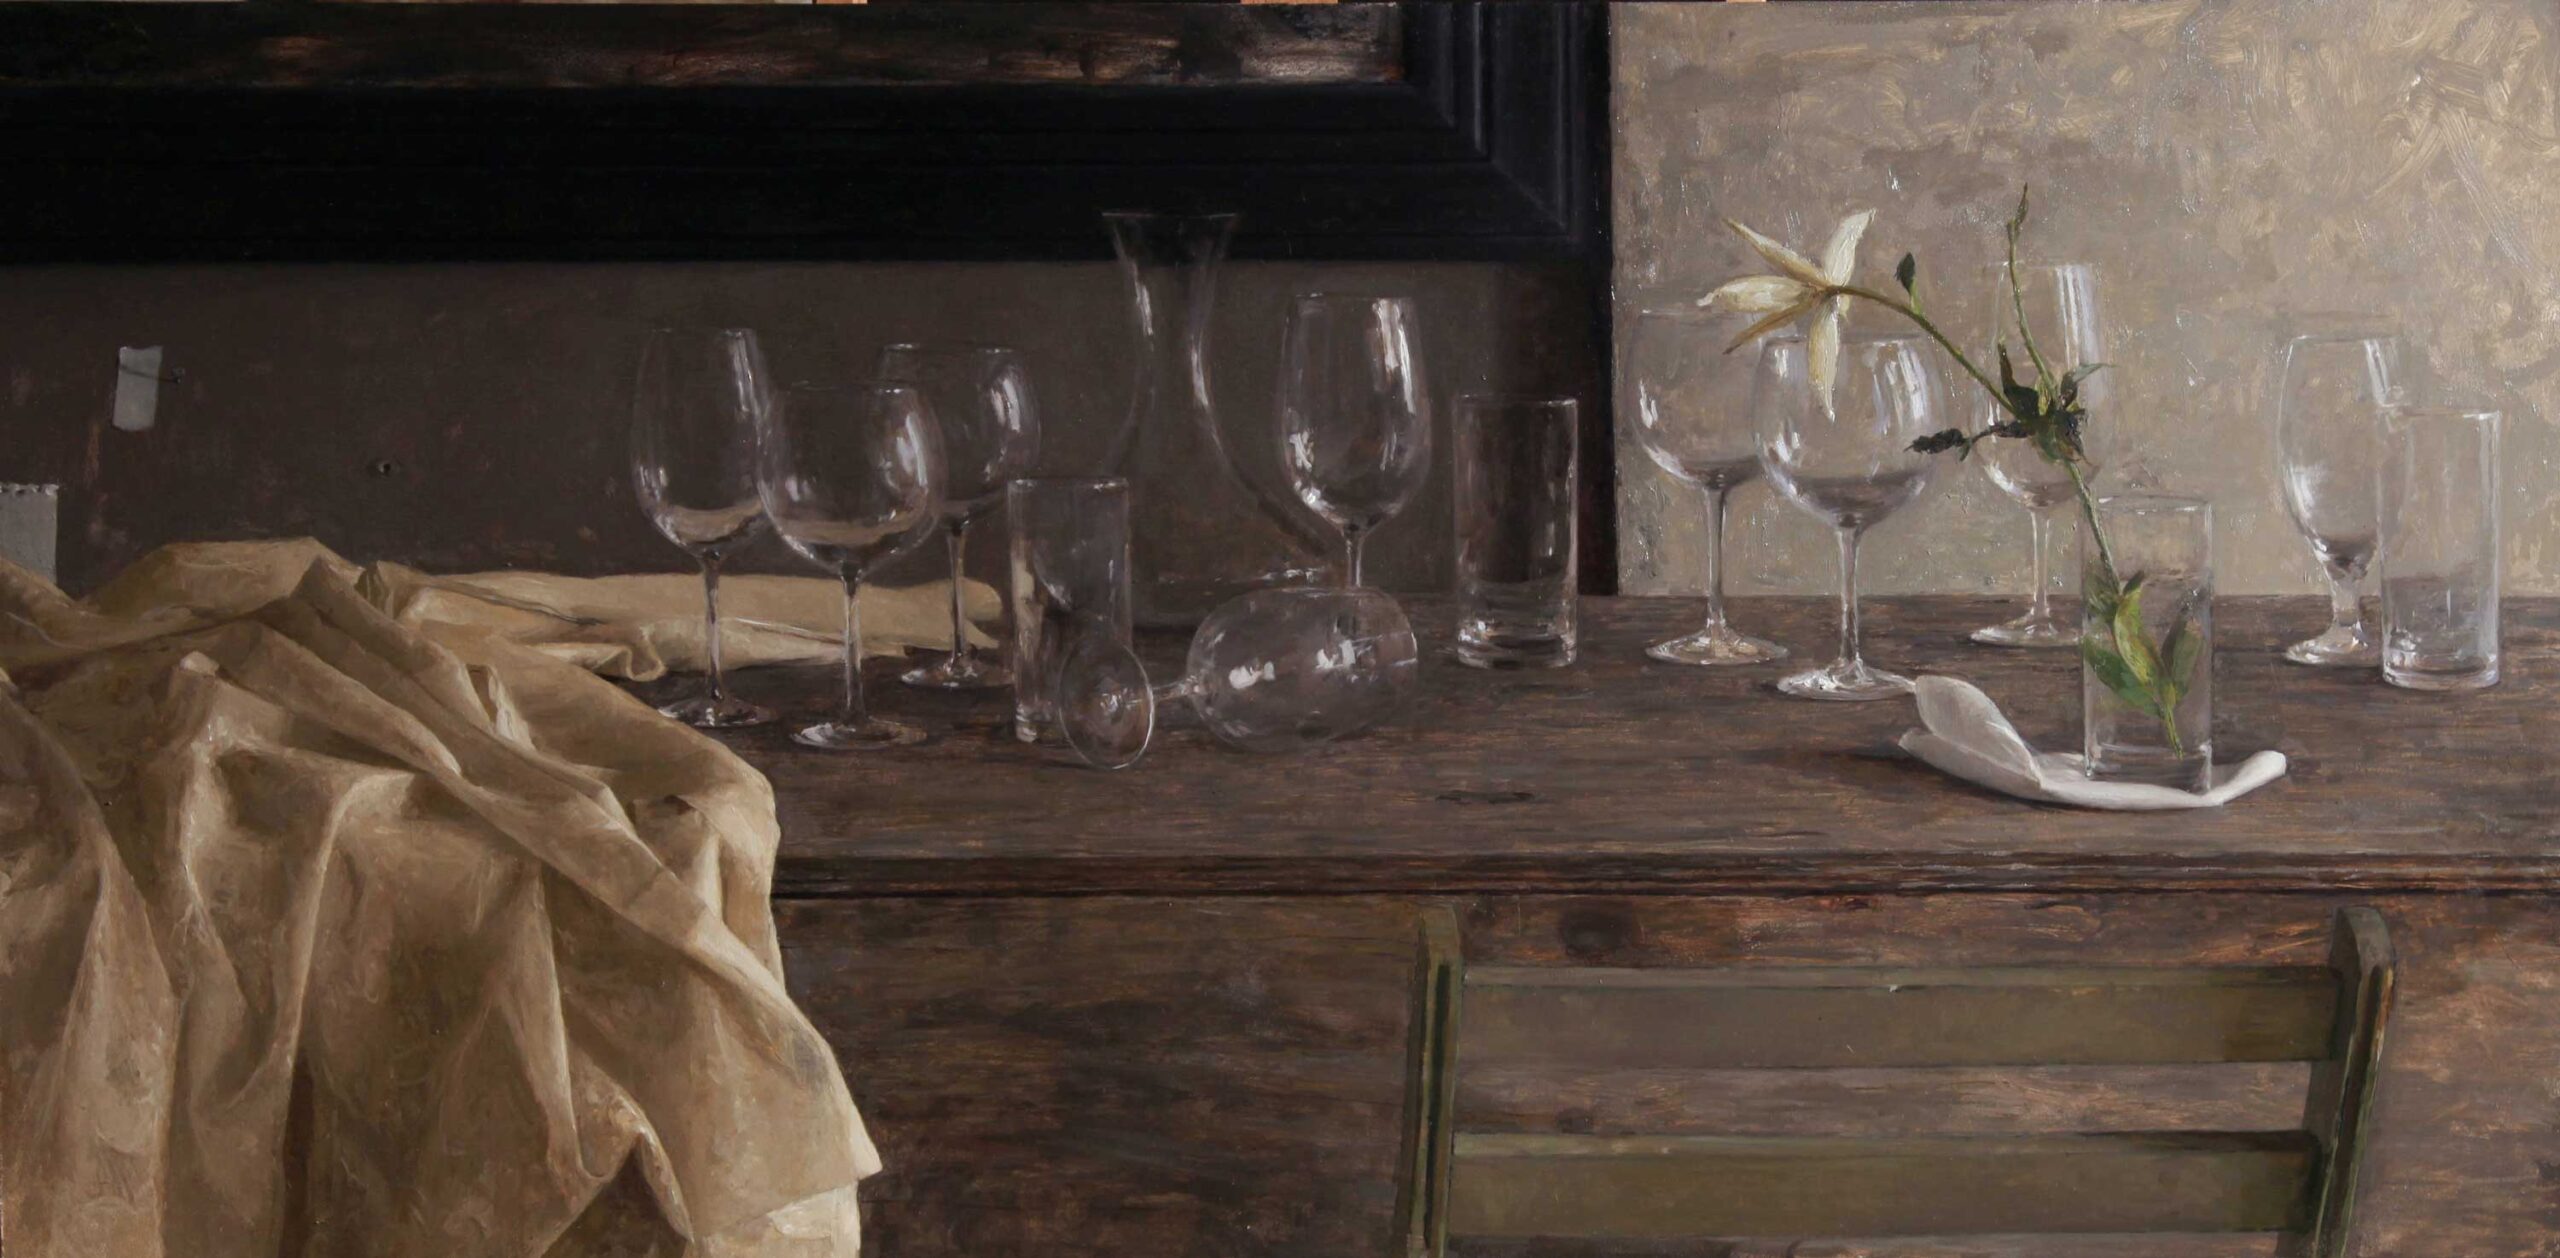 Michael Klein, "Studio Table," 24 x 45 inches, Oil on linen